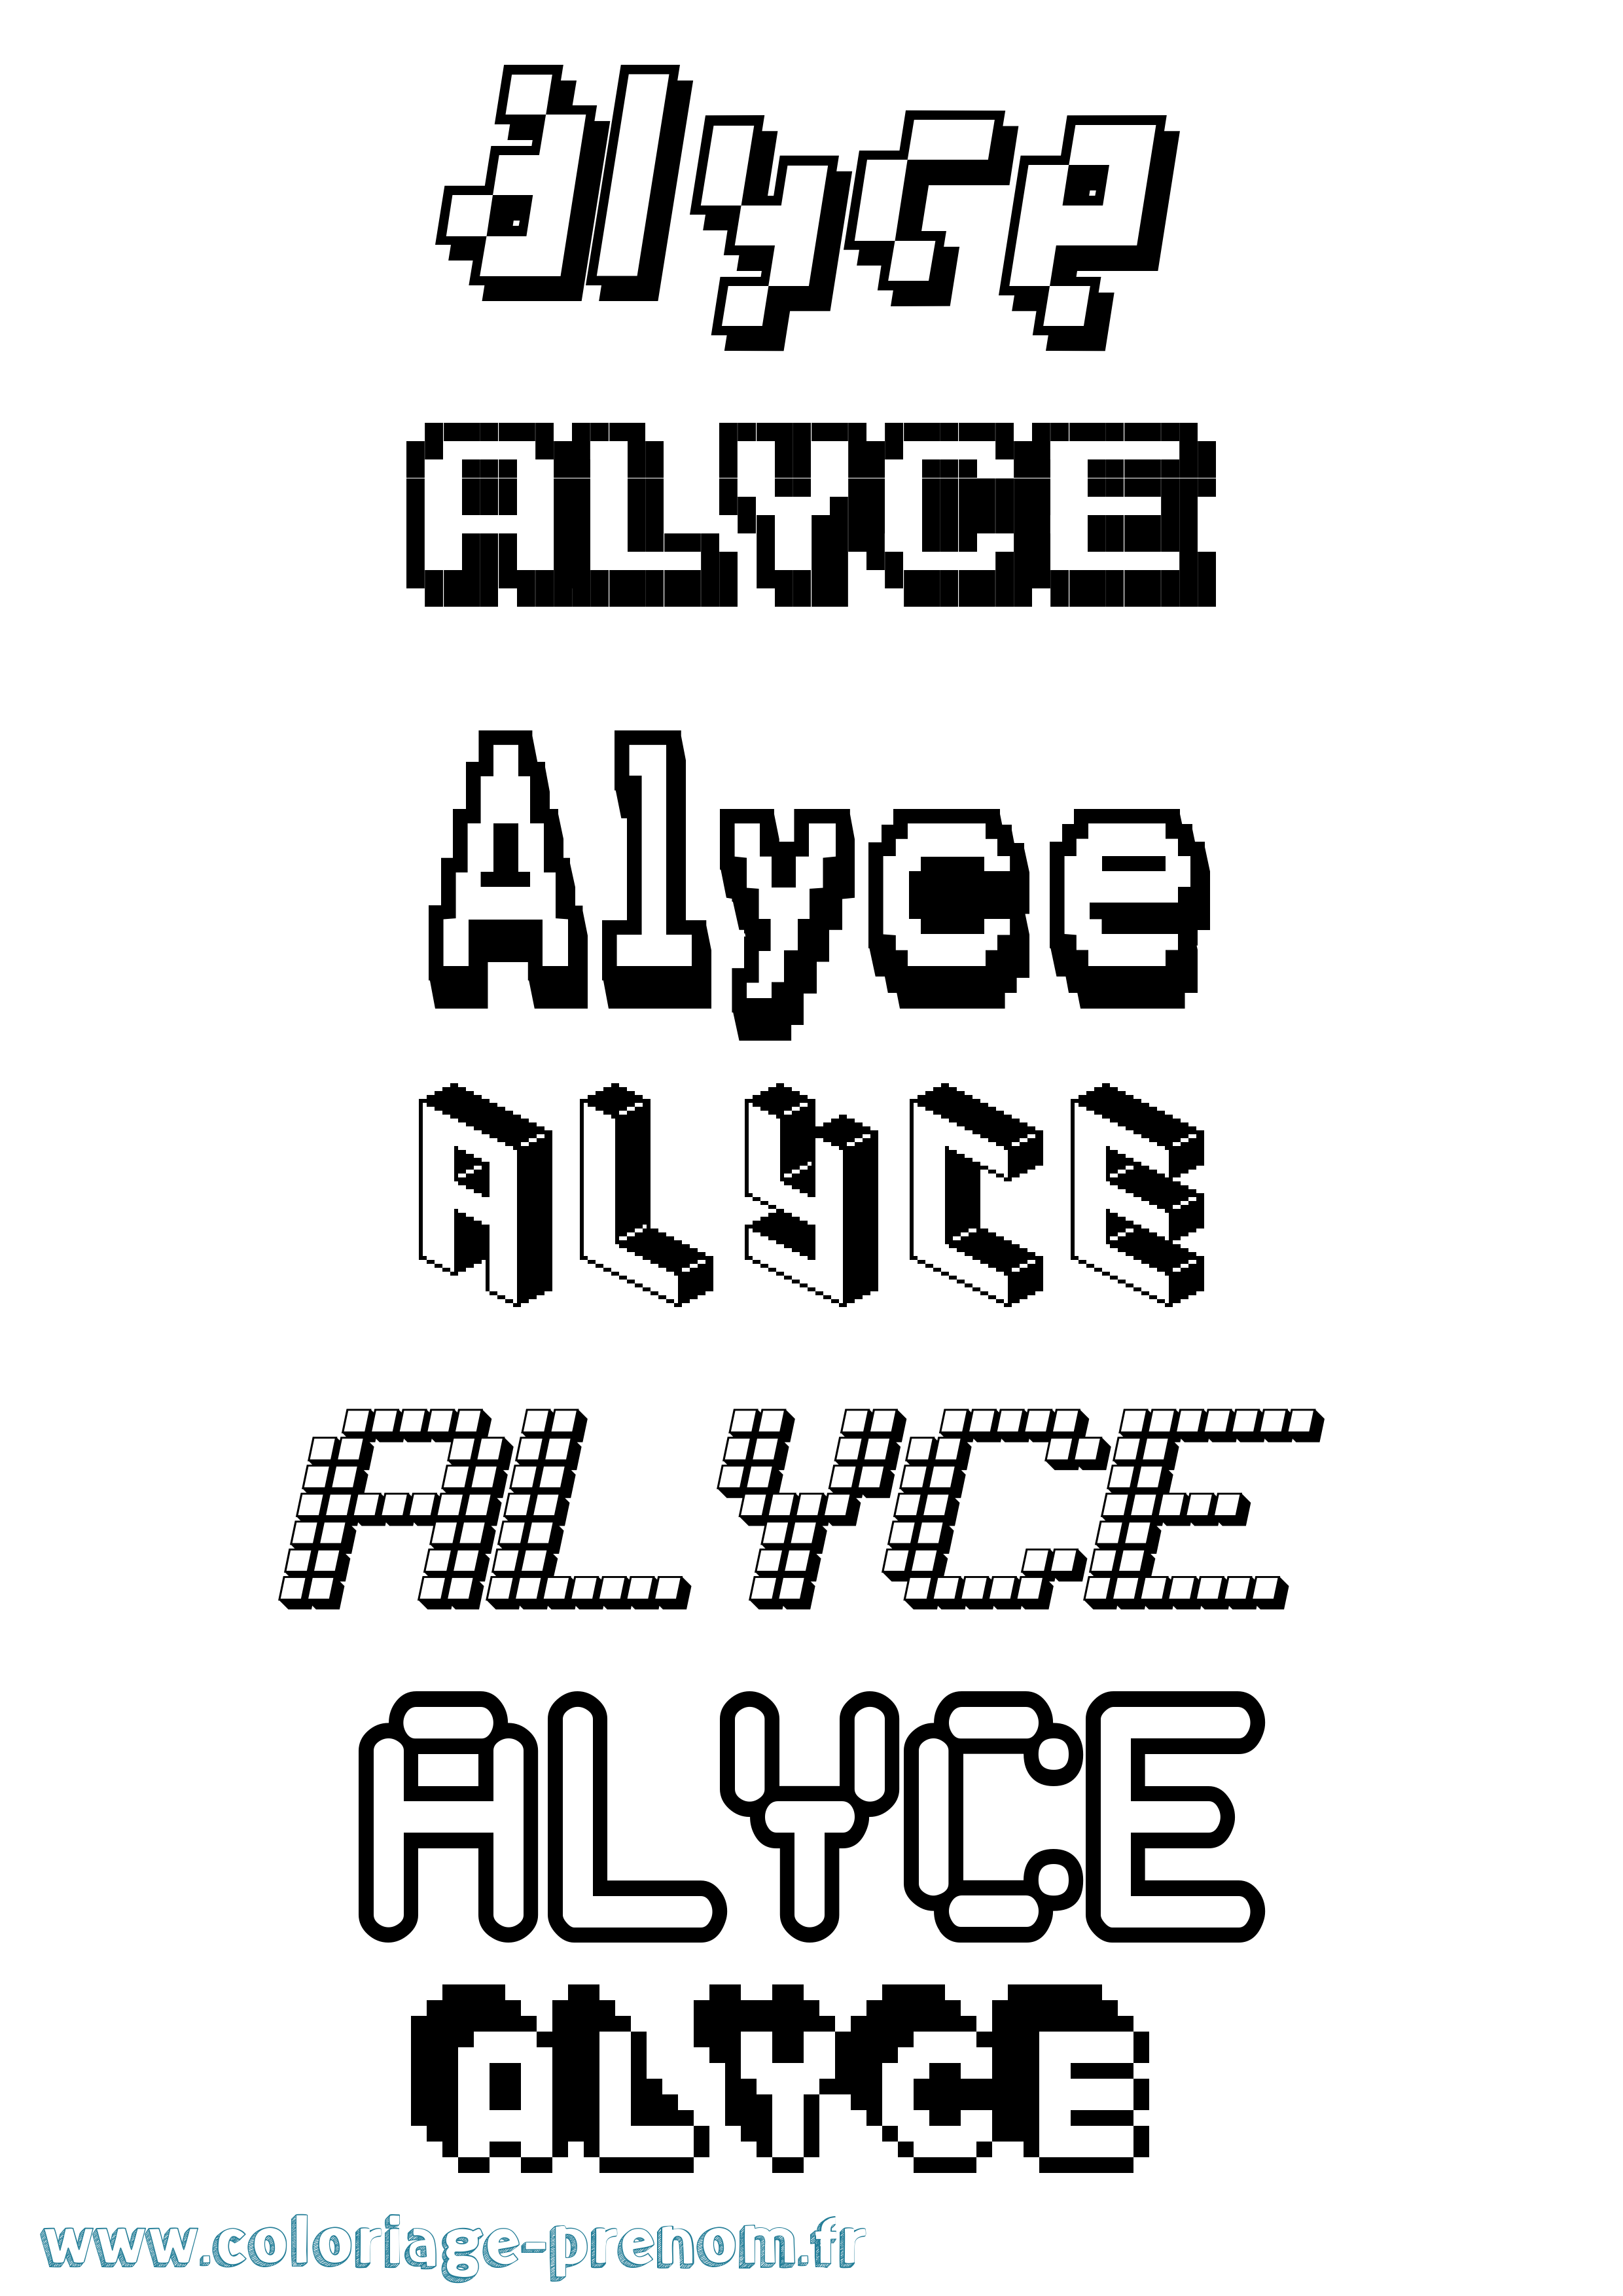 Coloriage prénom Alyce Pixel